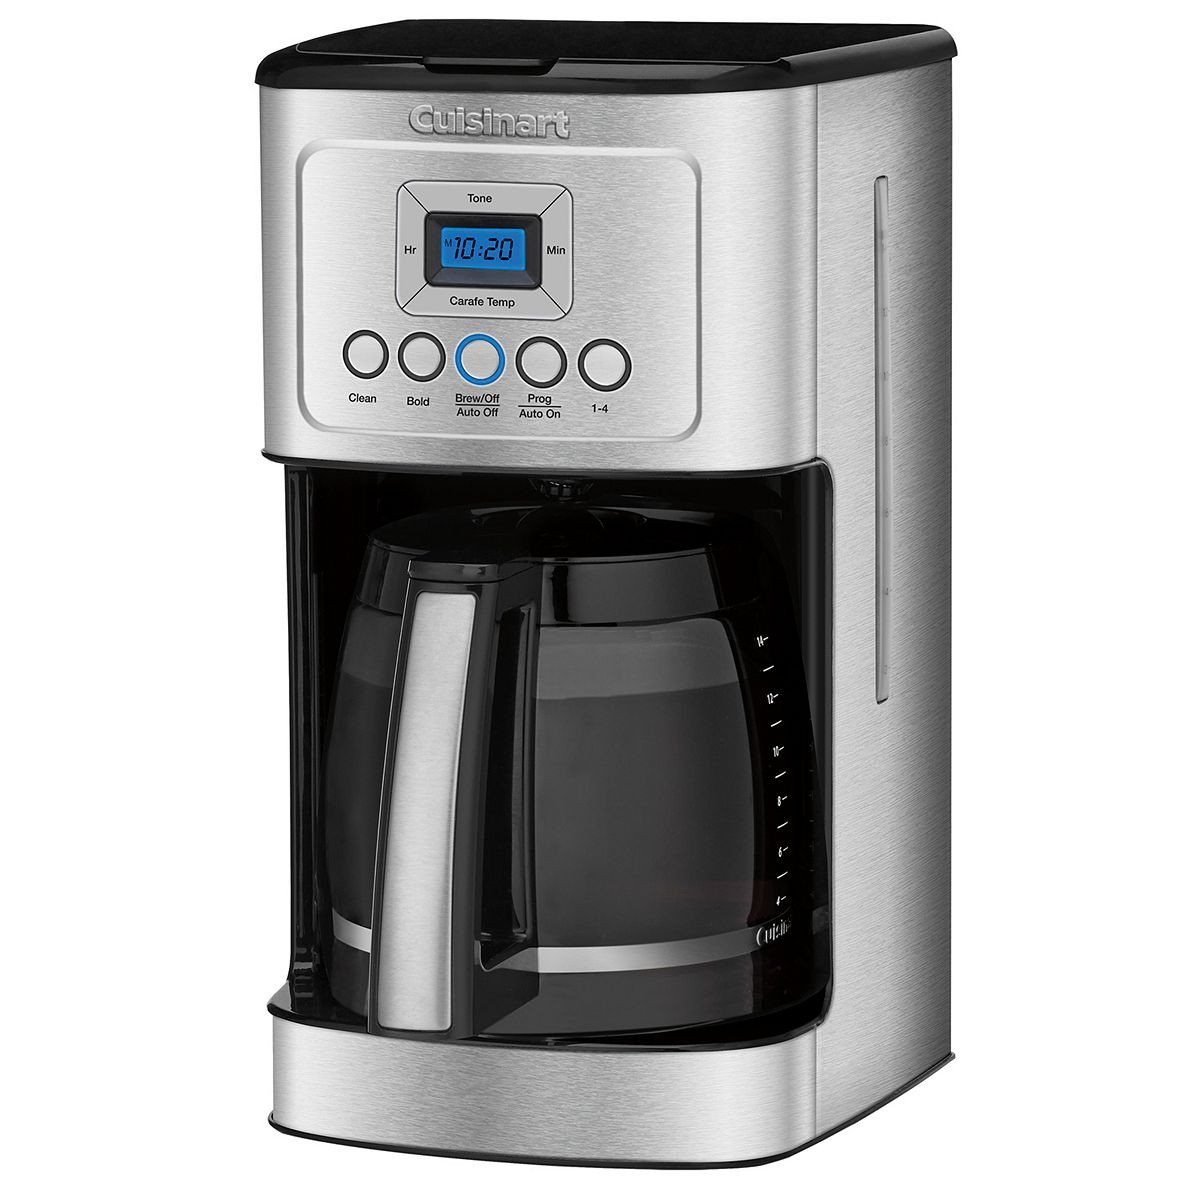 Cuisinart® PerfecTemp® 14-Cup Programmable Coffeemaker $79.99